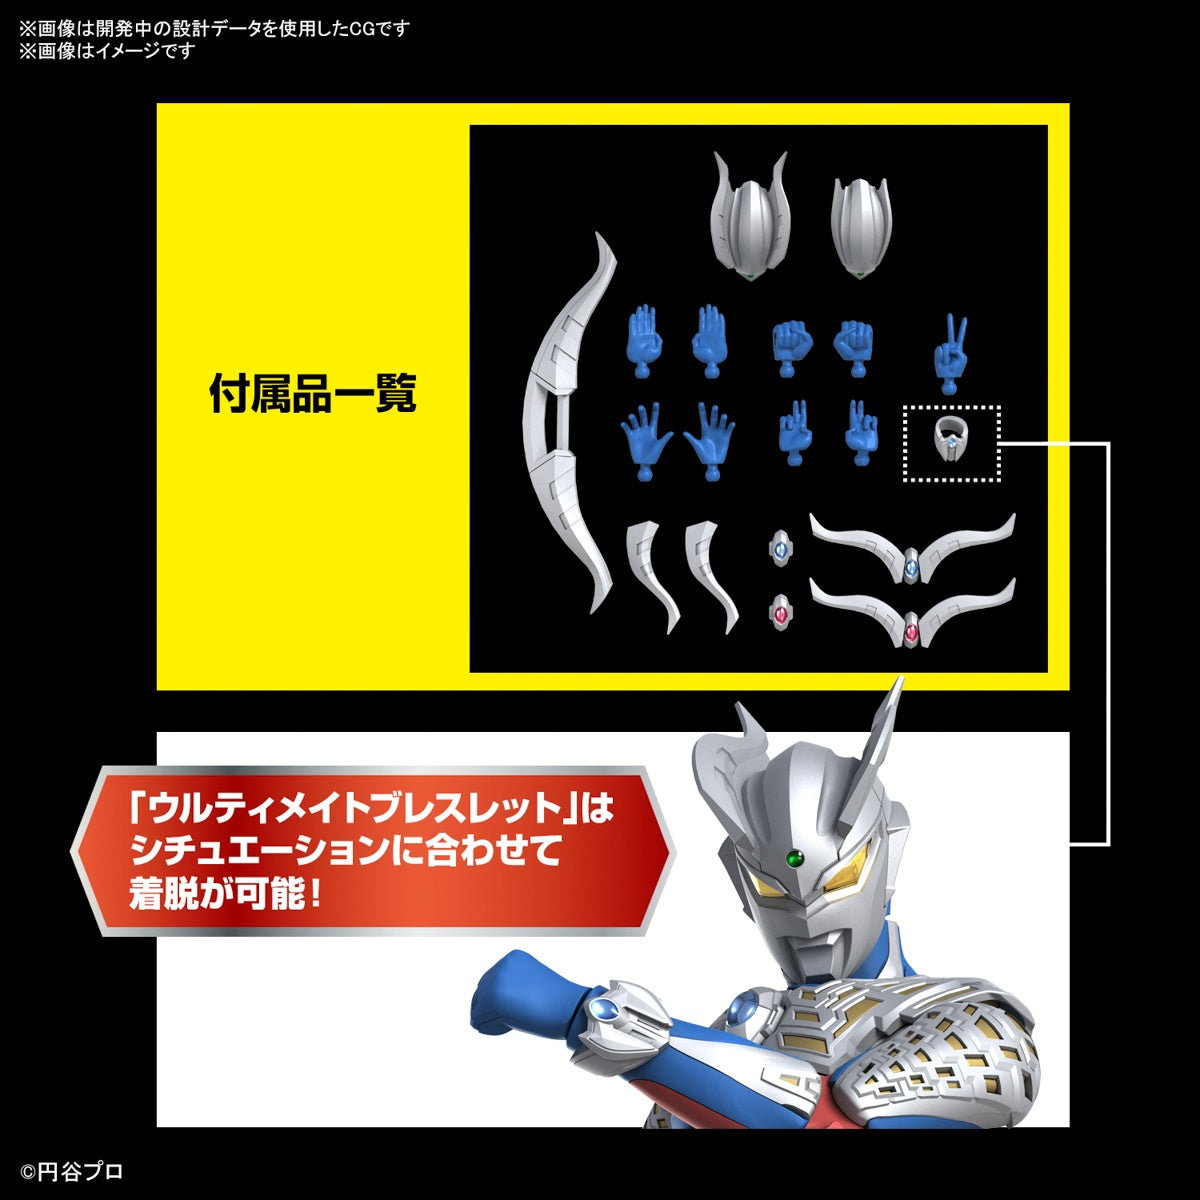 [PREORDER] Figure-Rise Standard Ultraman Zero